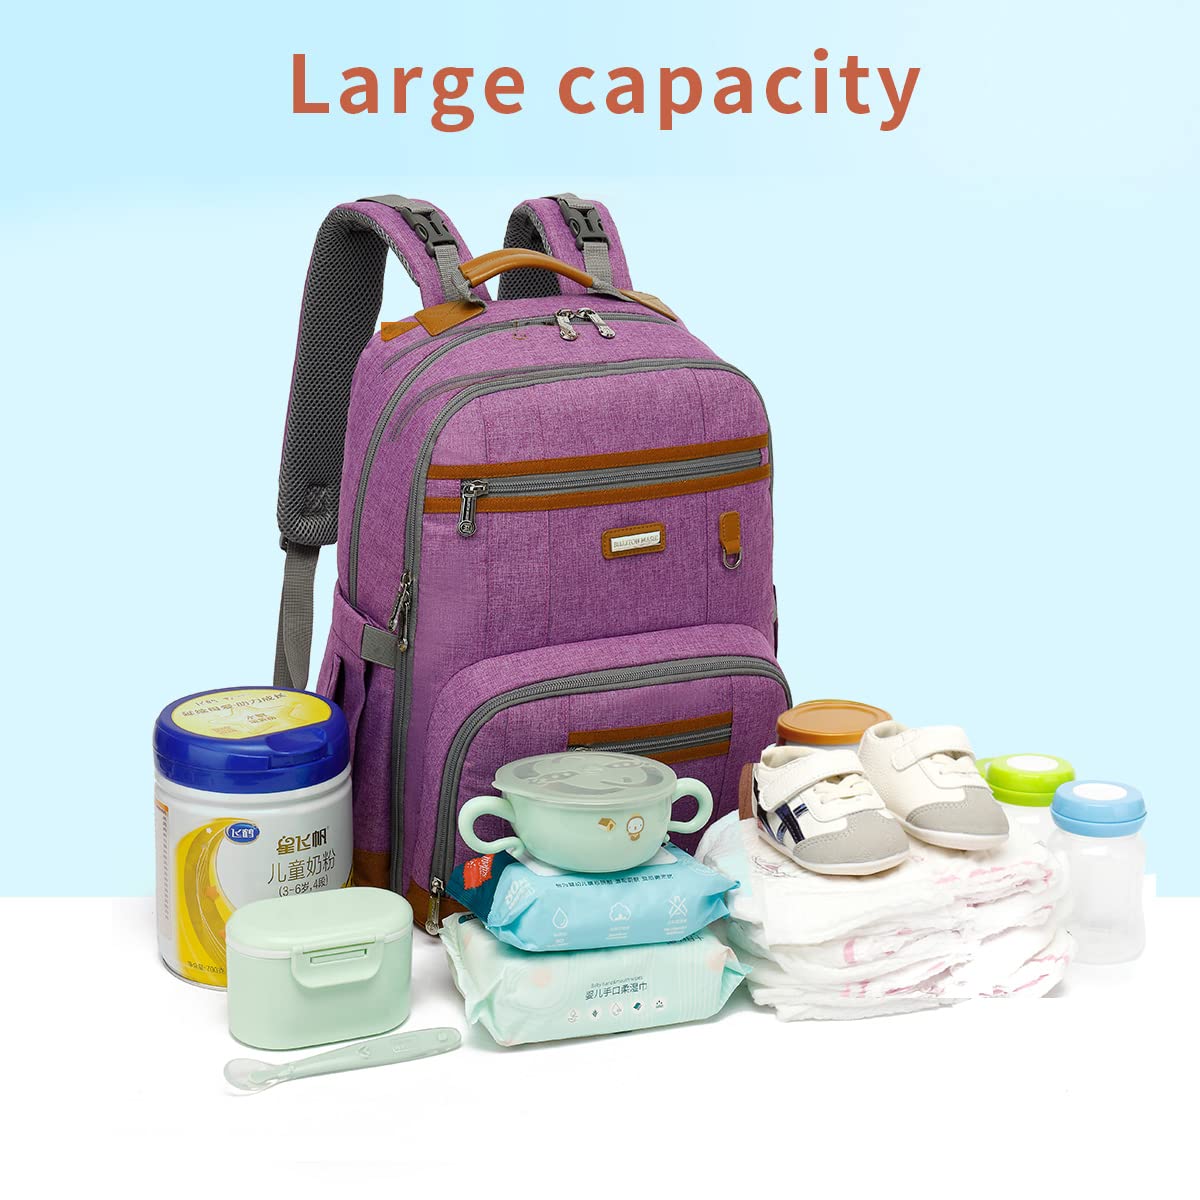 BILLITON MASHI Baby Diaper Bag Backpack for Mom